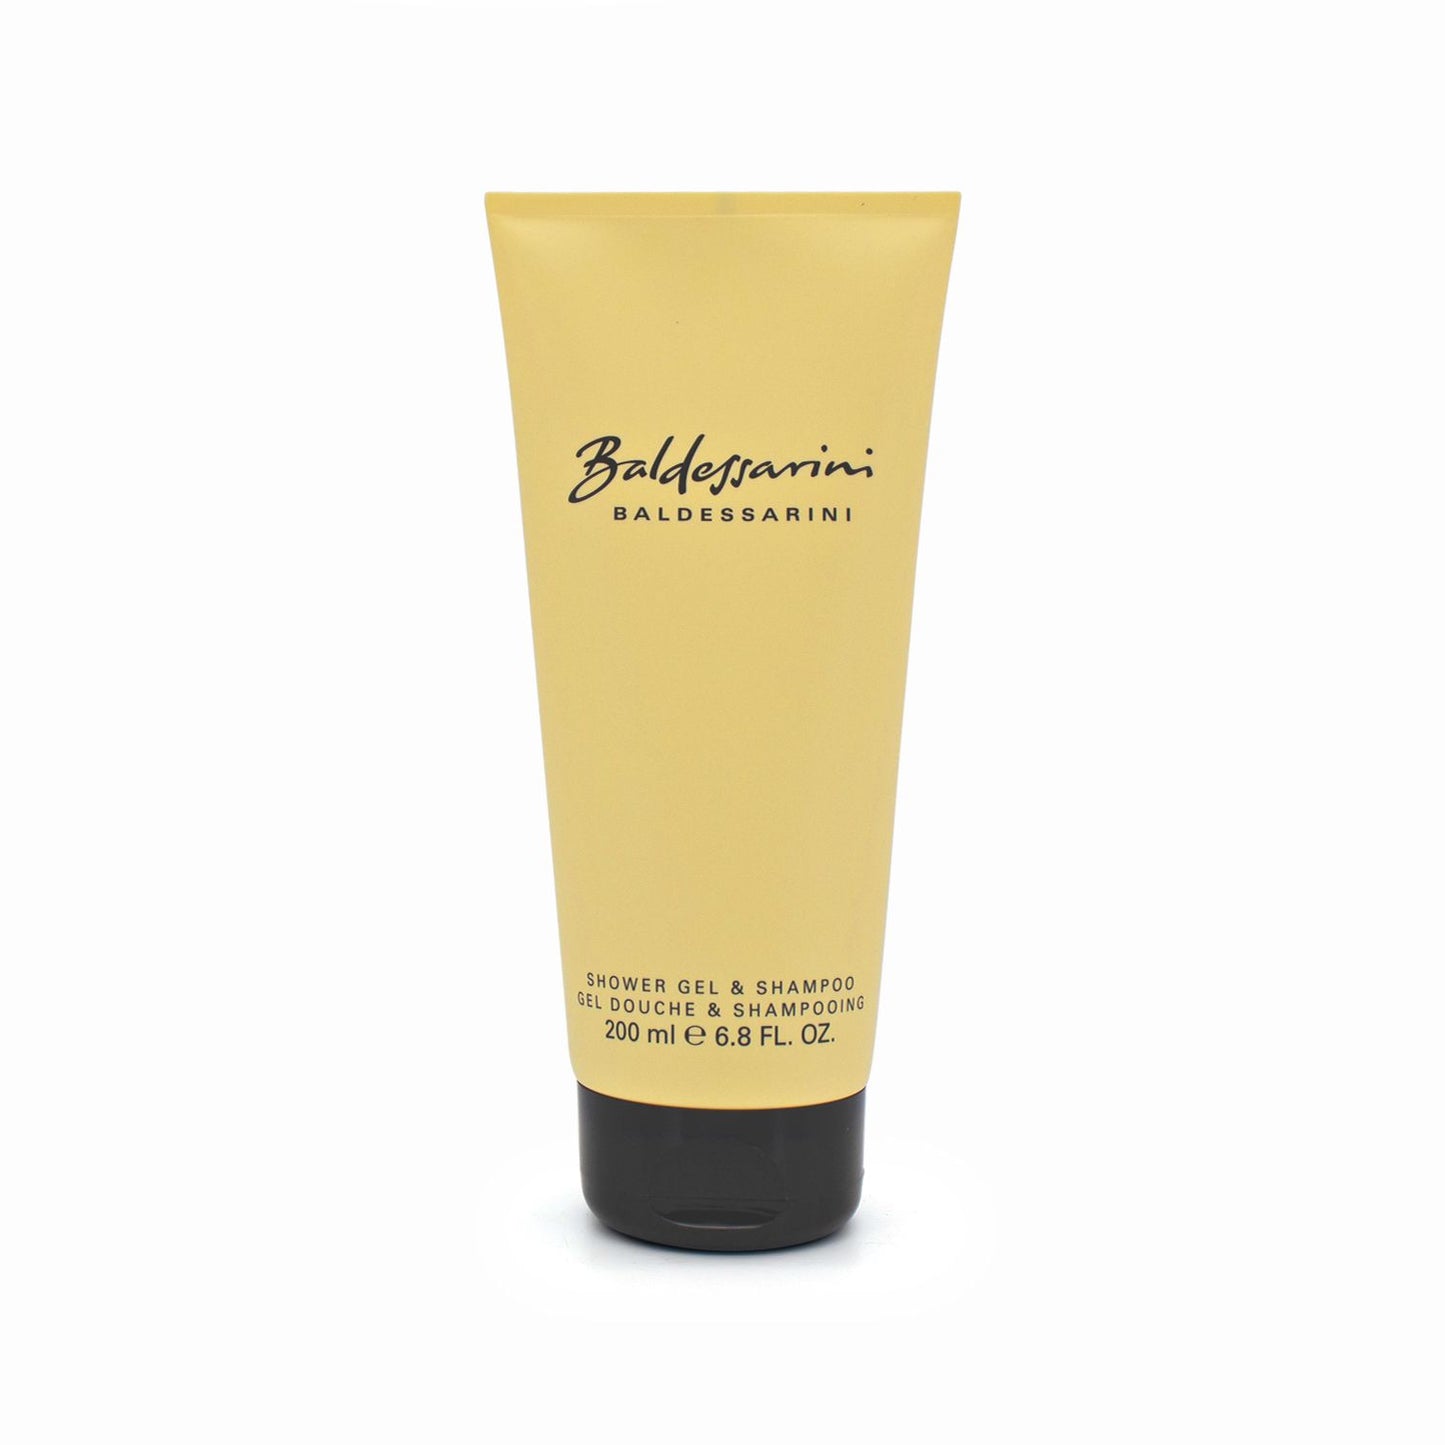 Baldessarini Baldessarini Shower Gel & Shampoo 200ml - Imperfect Box